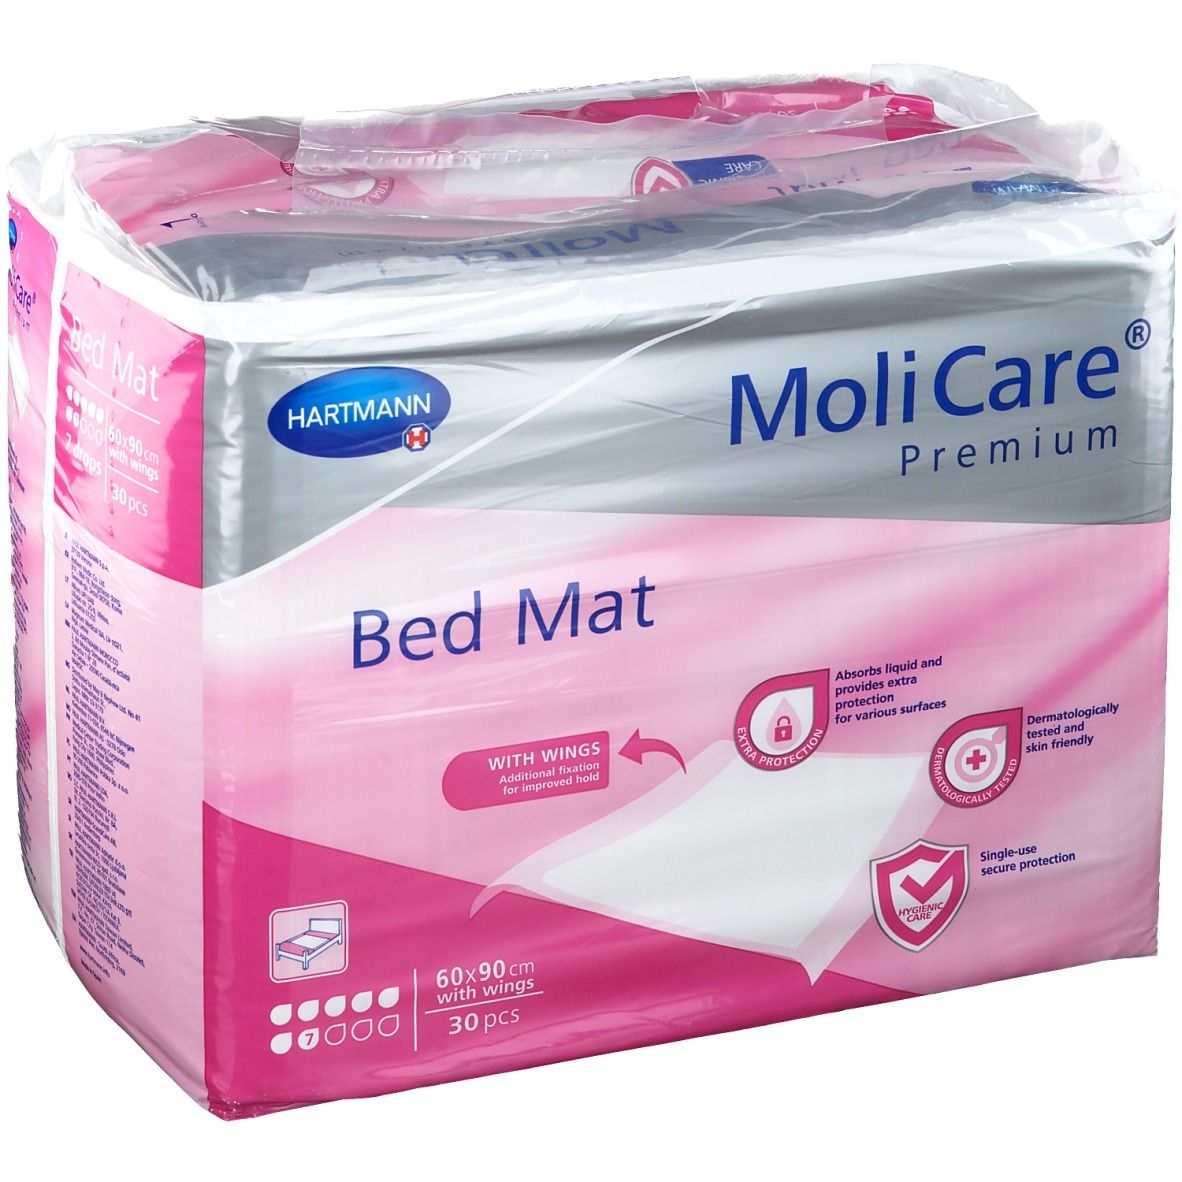 MoliCare Premium Bed Mat Hartmann